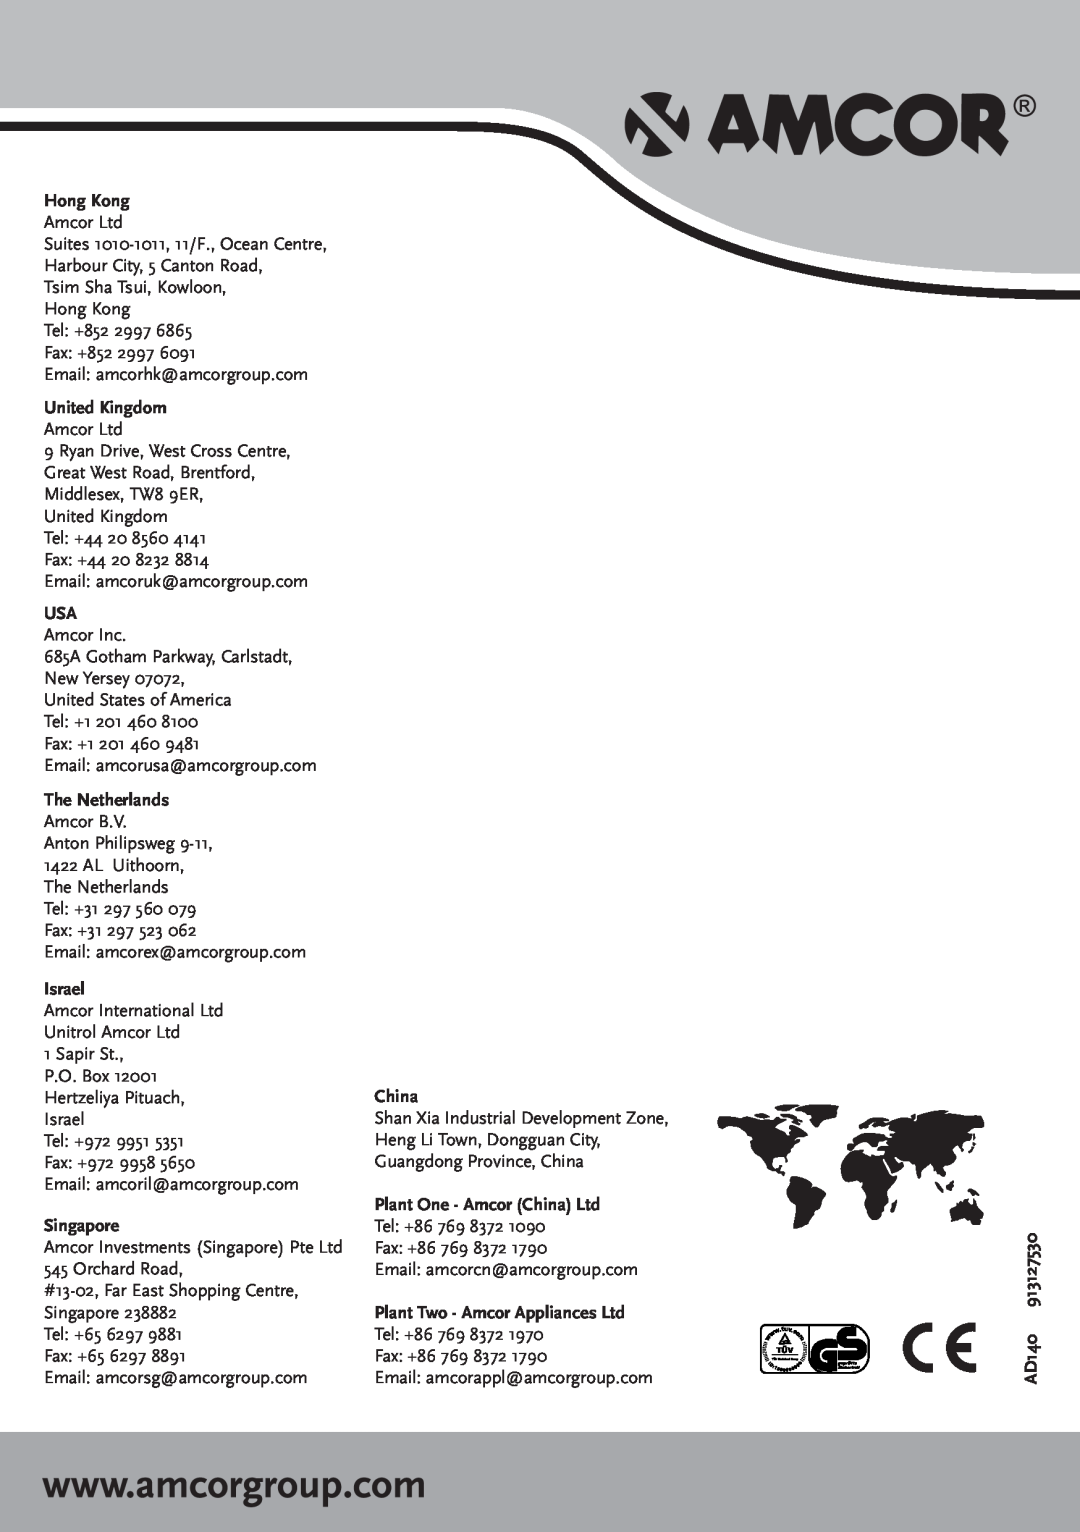 Amcor Ad 140 manual Hong Kong, United Kingdom, USA Amcor Inc, The Netherlands, Israel, China, Singapore, AD140 